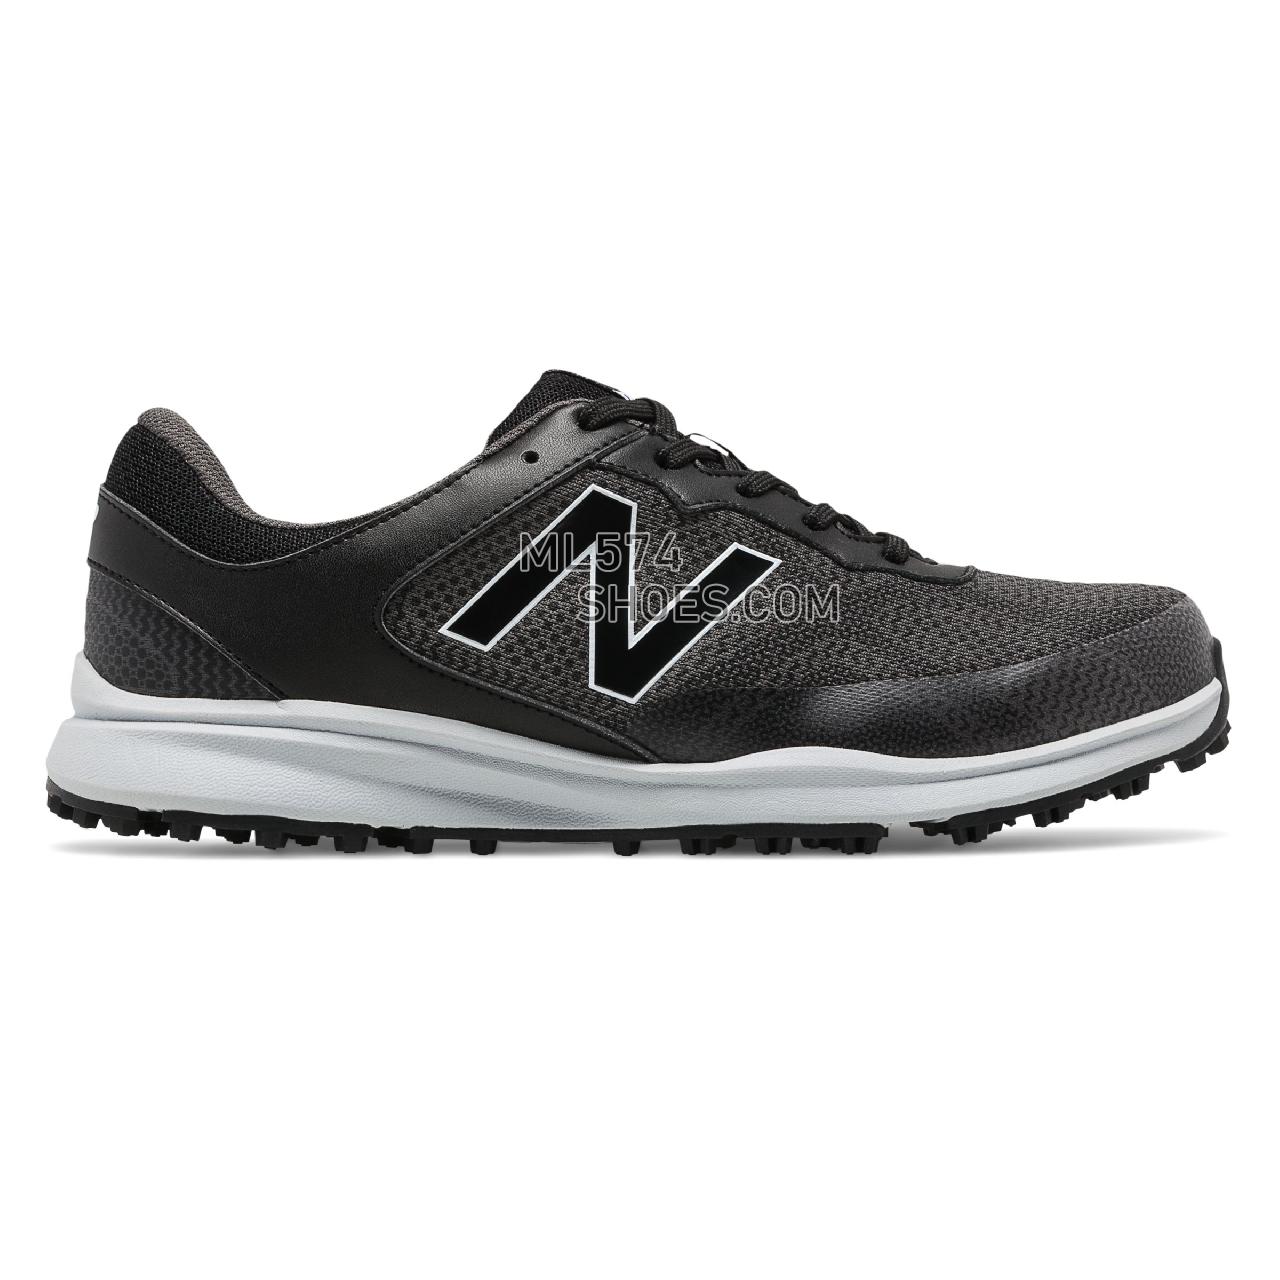 New Balance Breeze - Men's Golf - Black with Grey - NBG1801BG